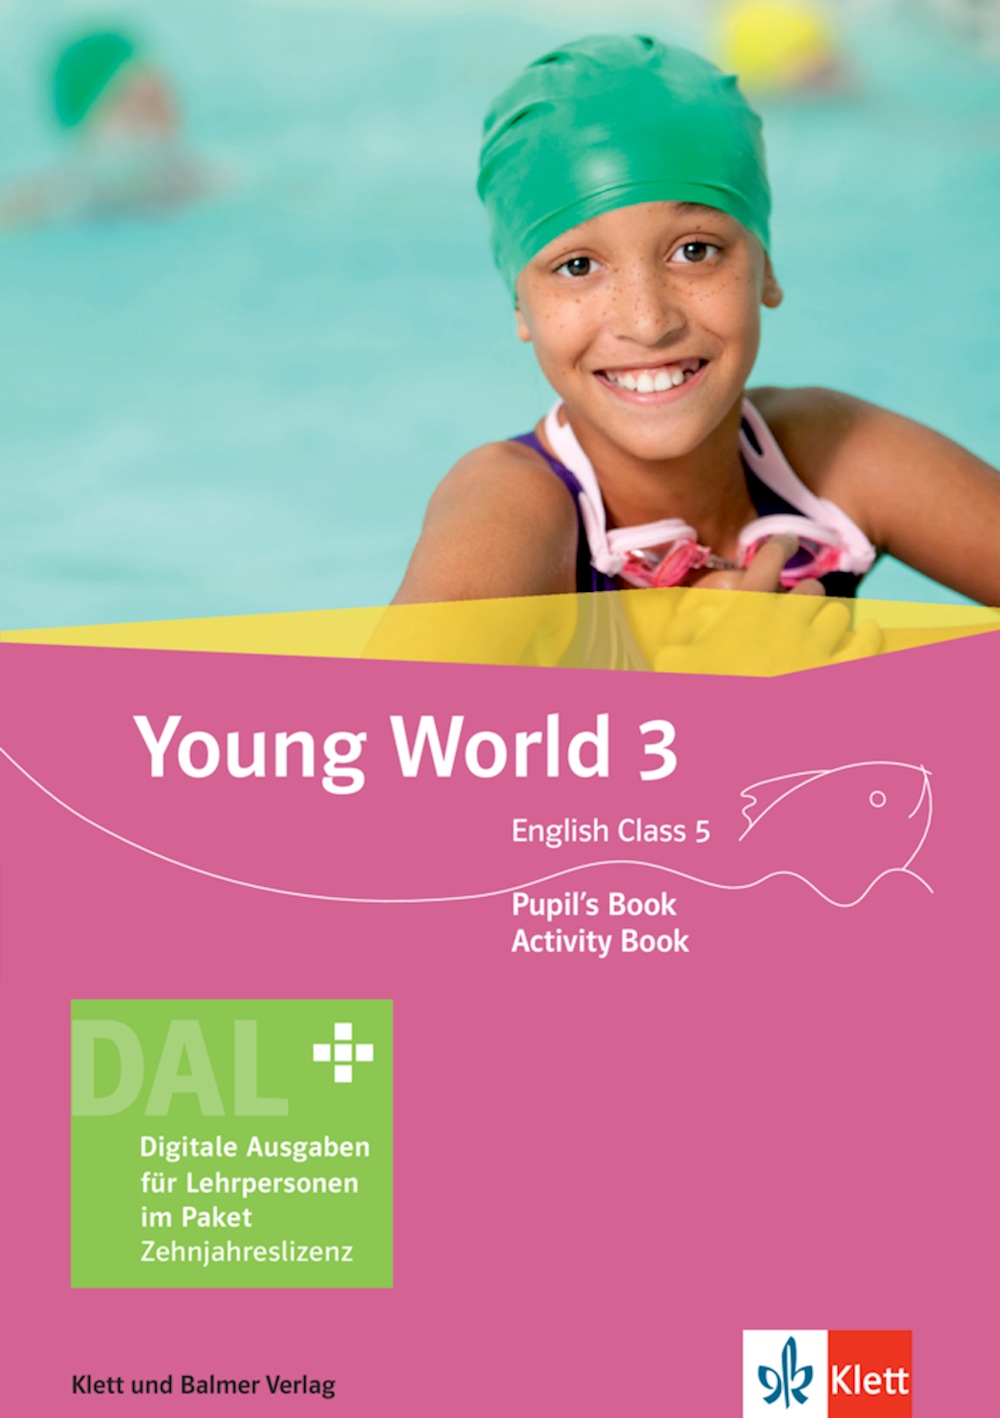 Young World 3, Pupil's+Activity B., DAL Digitale Ausg. f. Lehrpersonen